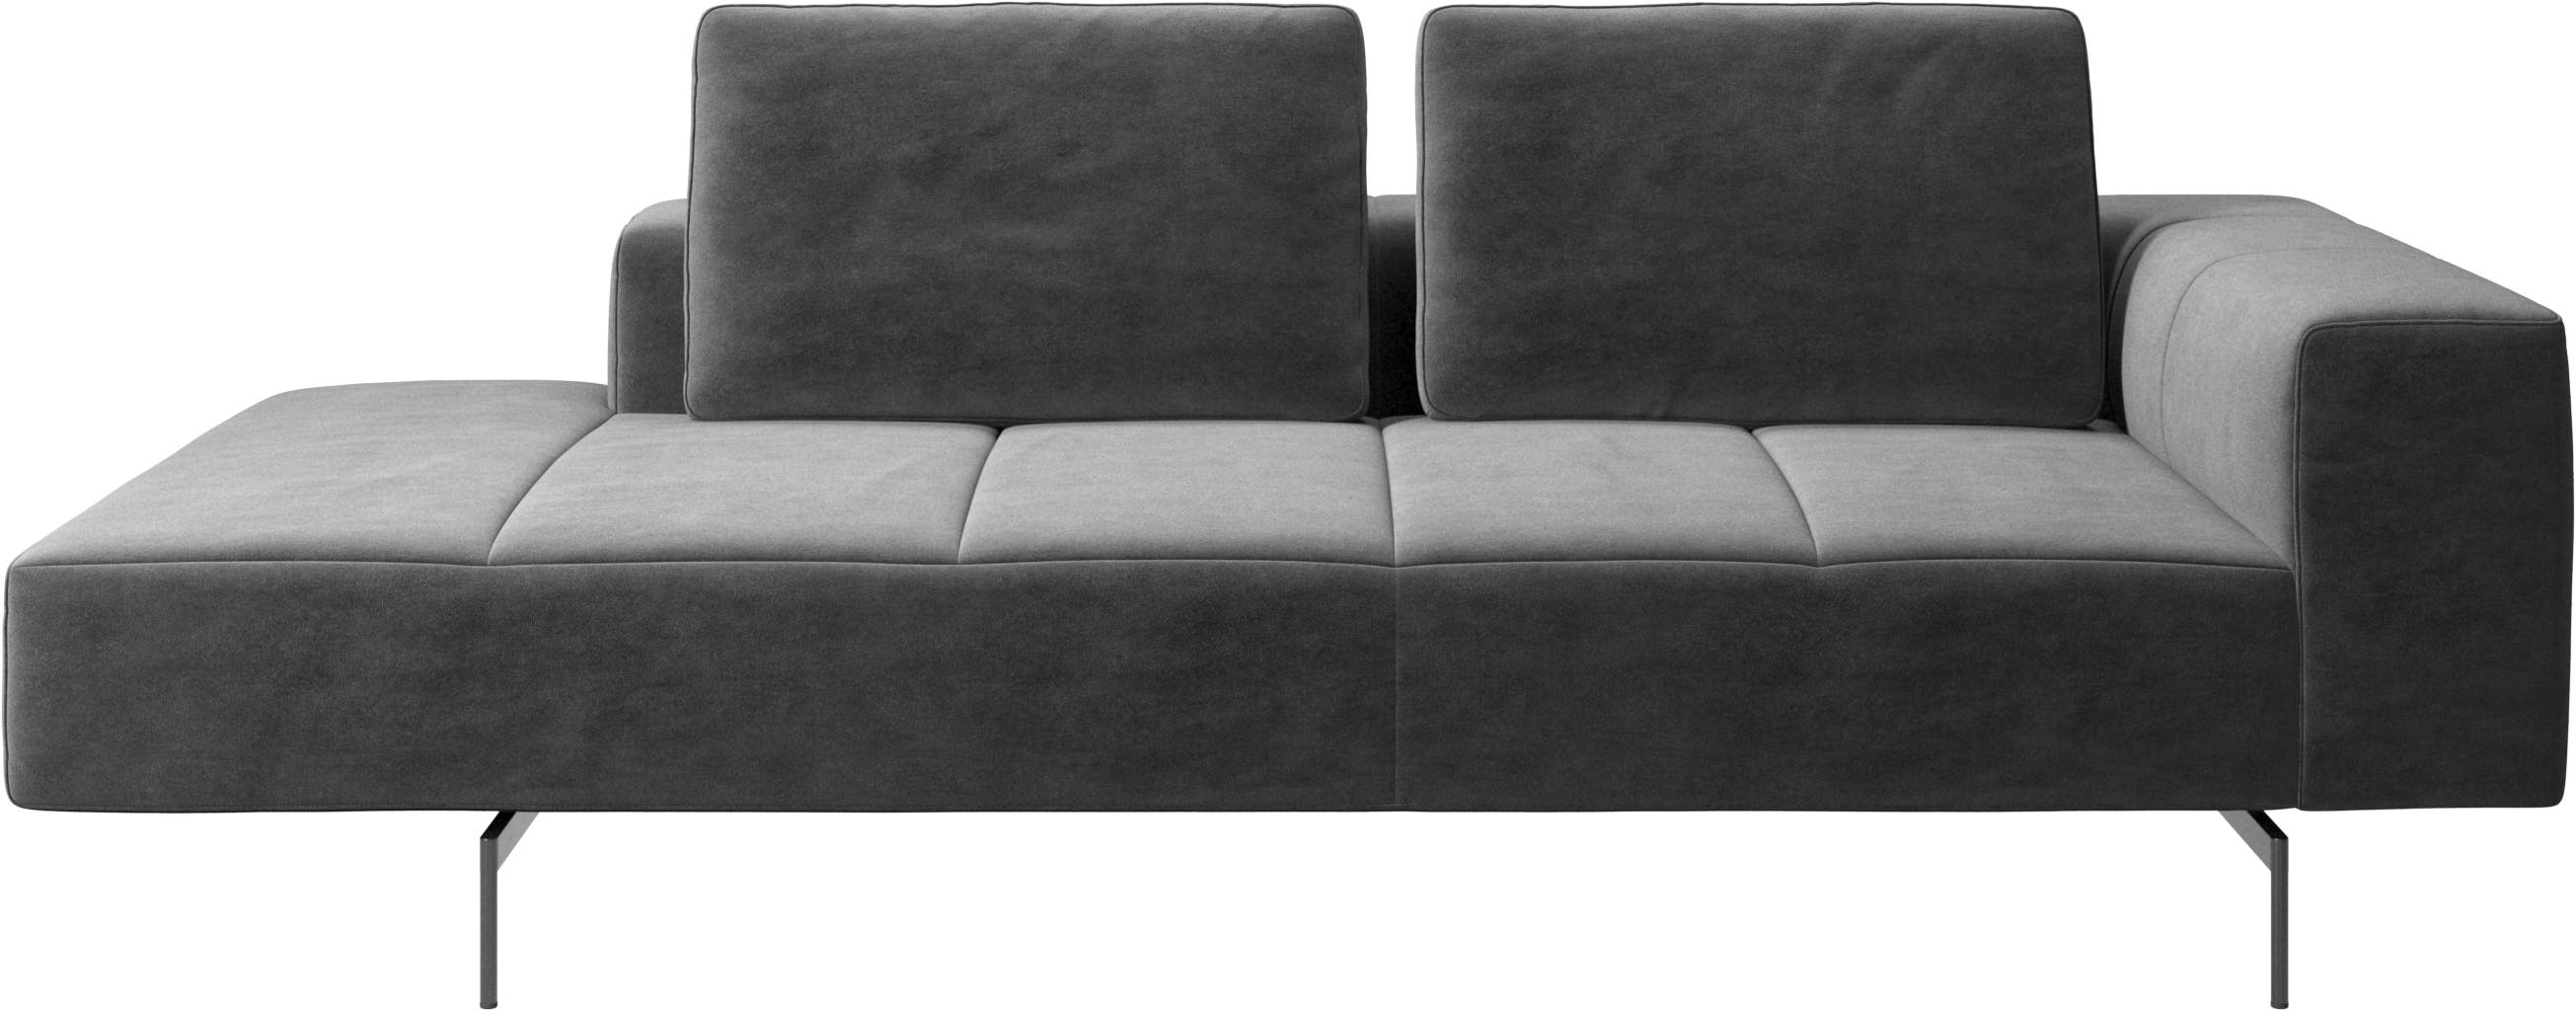 Amsterdam resting module for sofa, armrest right, open end left